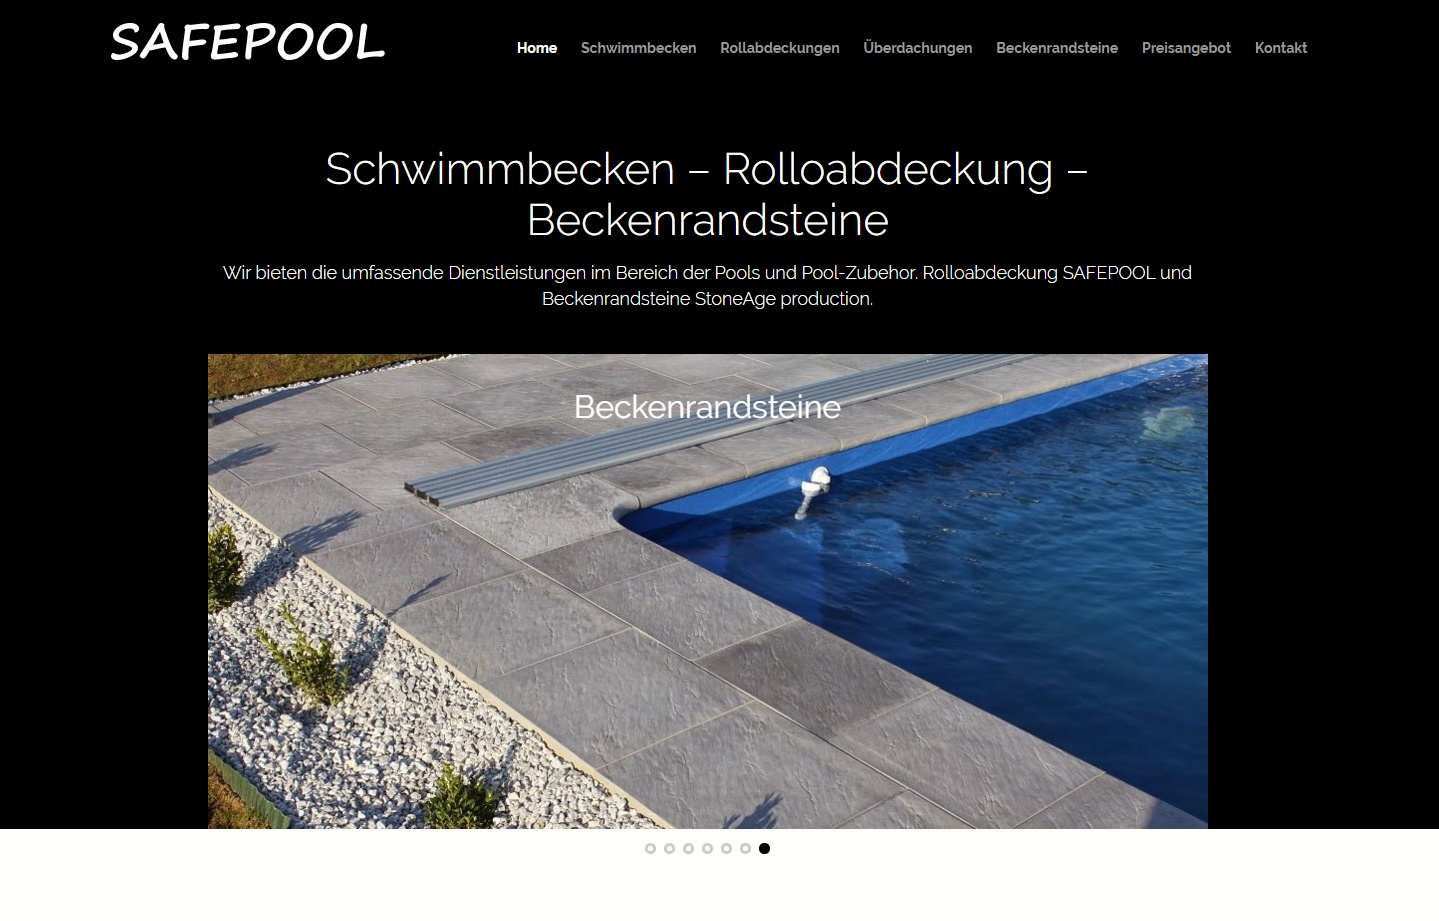 New website safepool.de